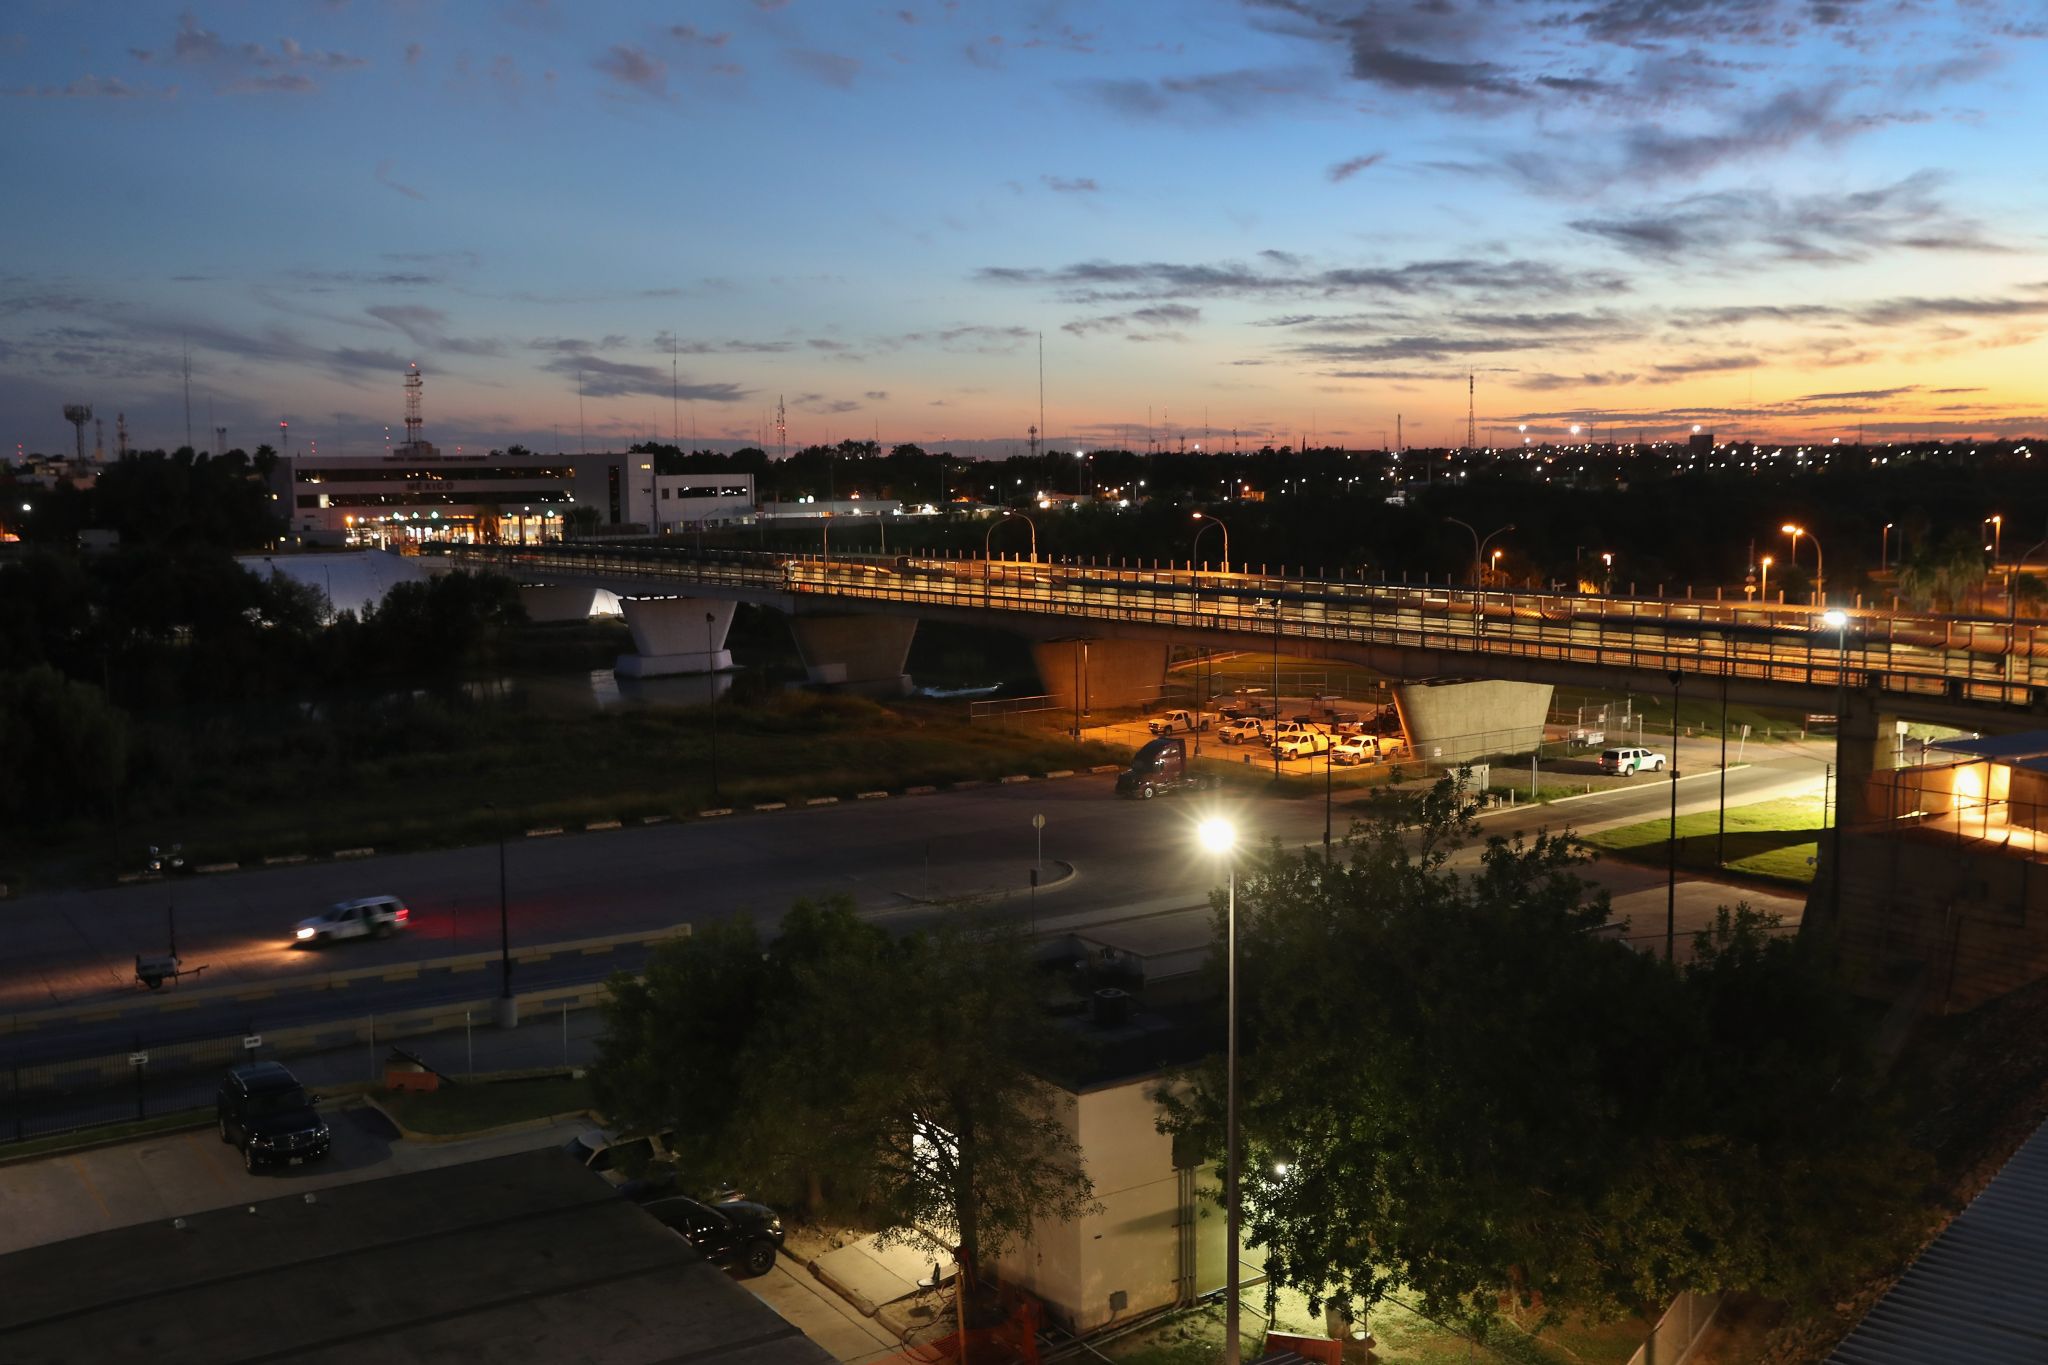 Laredo one of the fastestgrowing metro areas in the U.S., according to